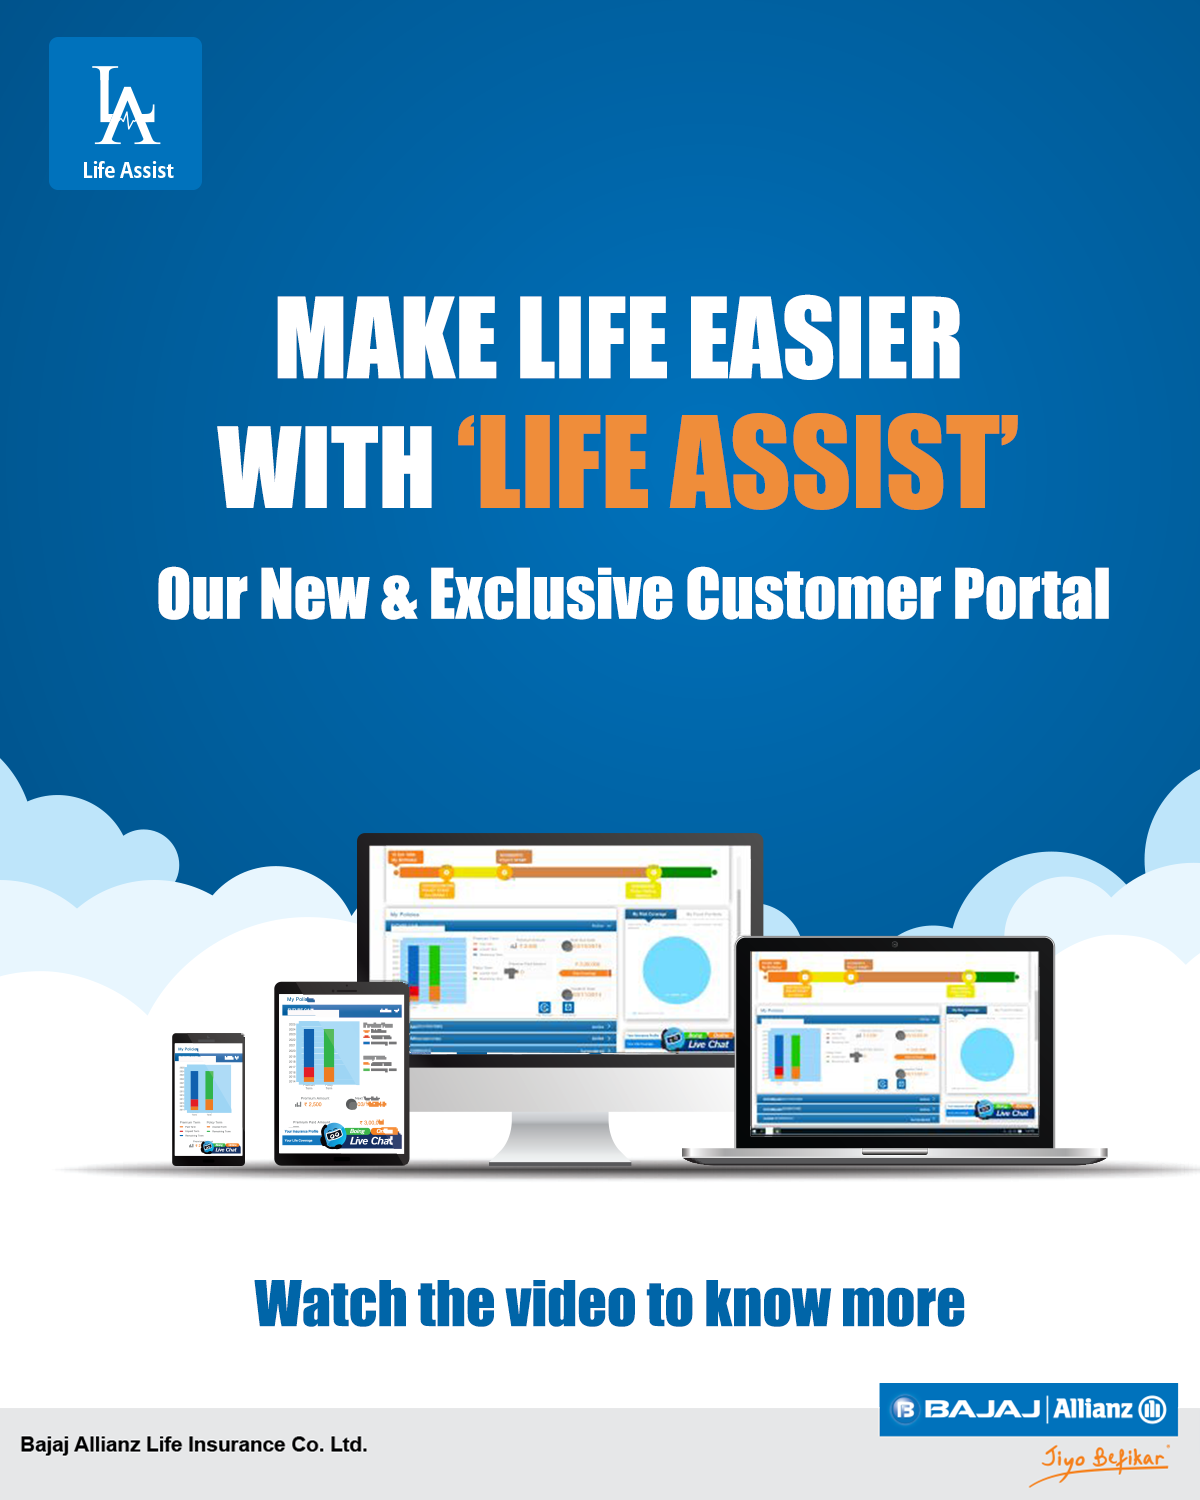 Bajaj Allianz Life Assist Customer Portal Is Now Live